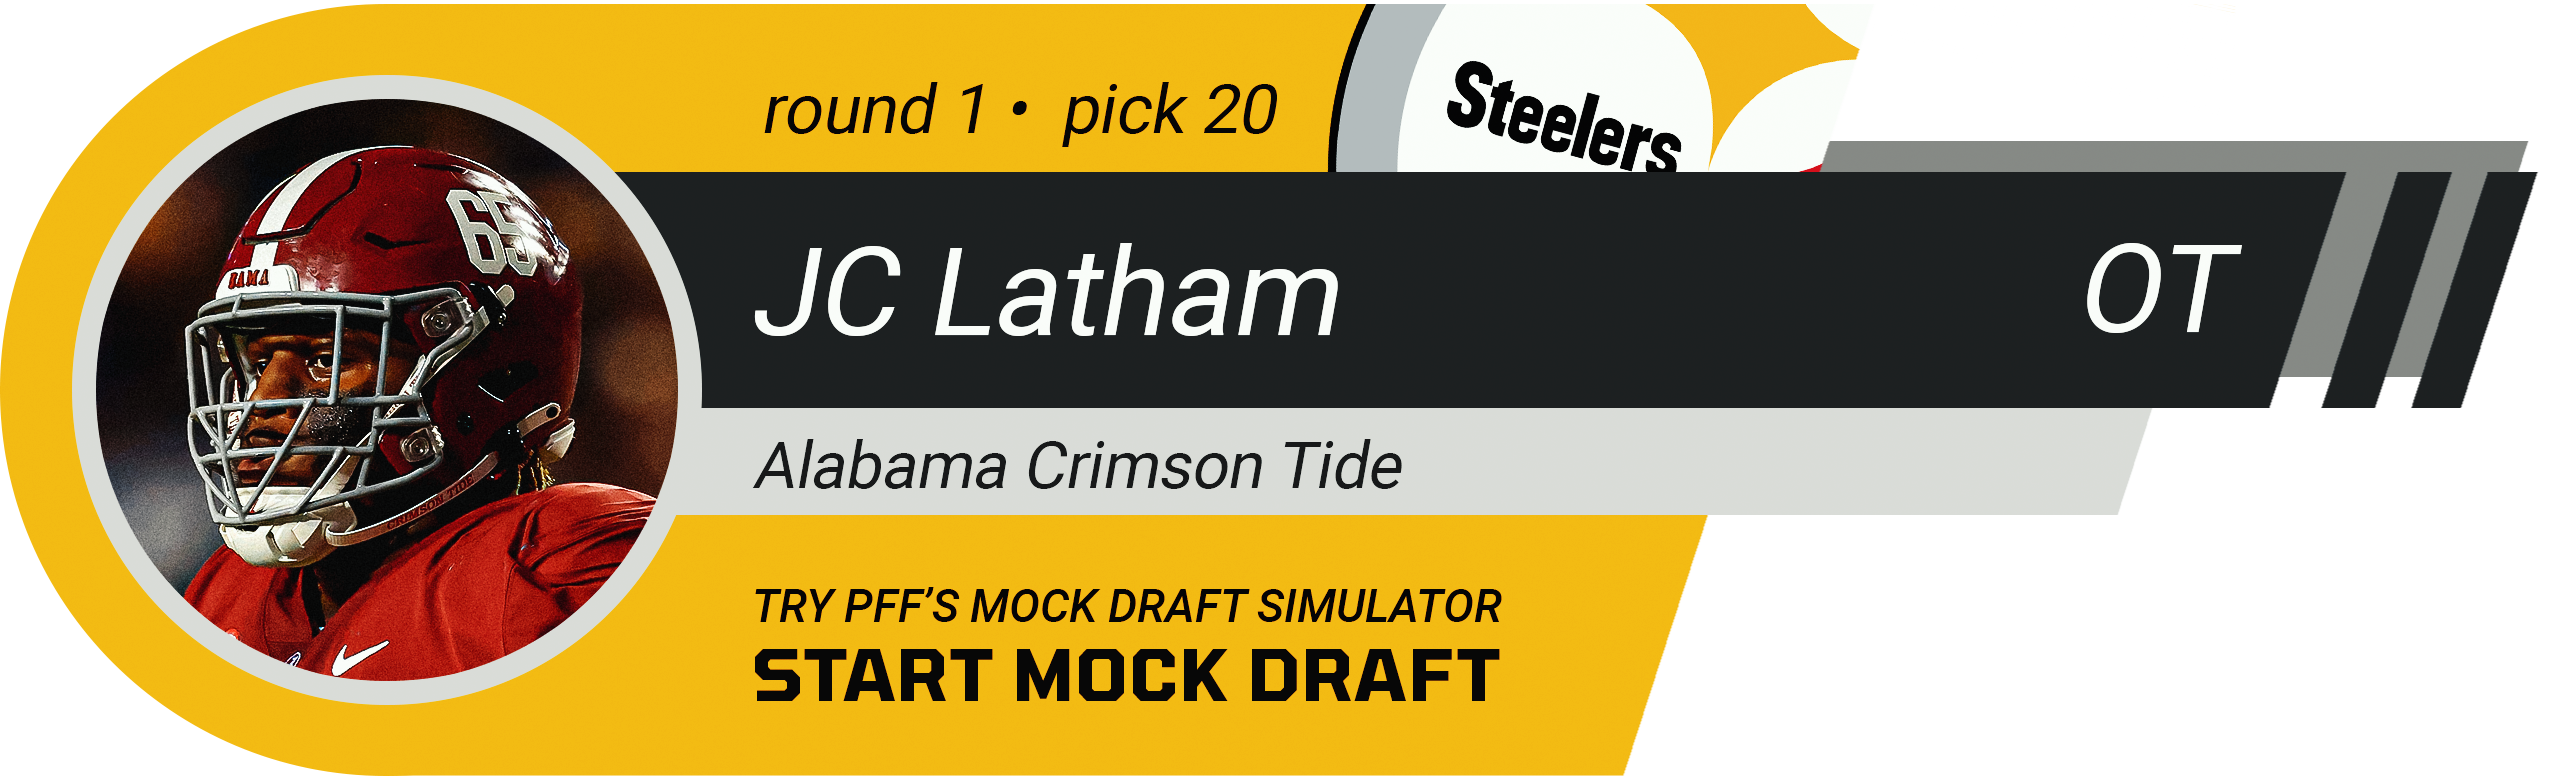 20. Pittsburgh Steelers: T JC Latham, Alabama